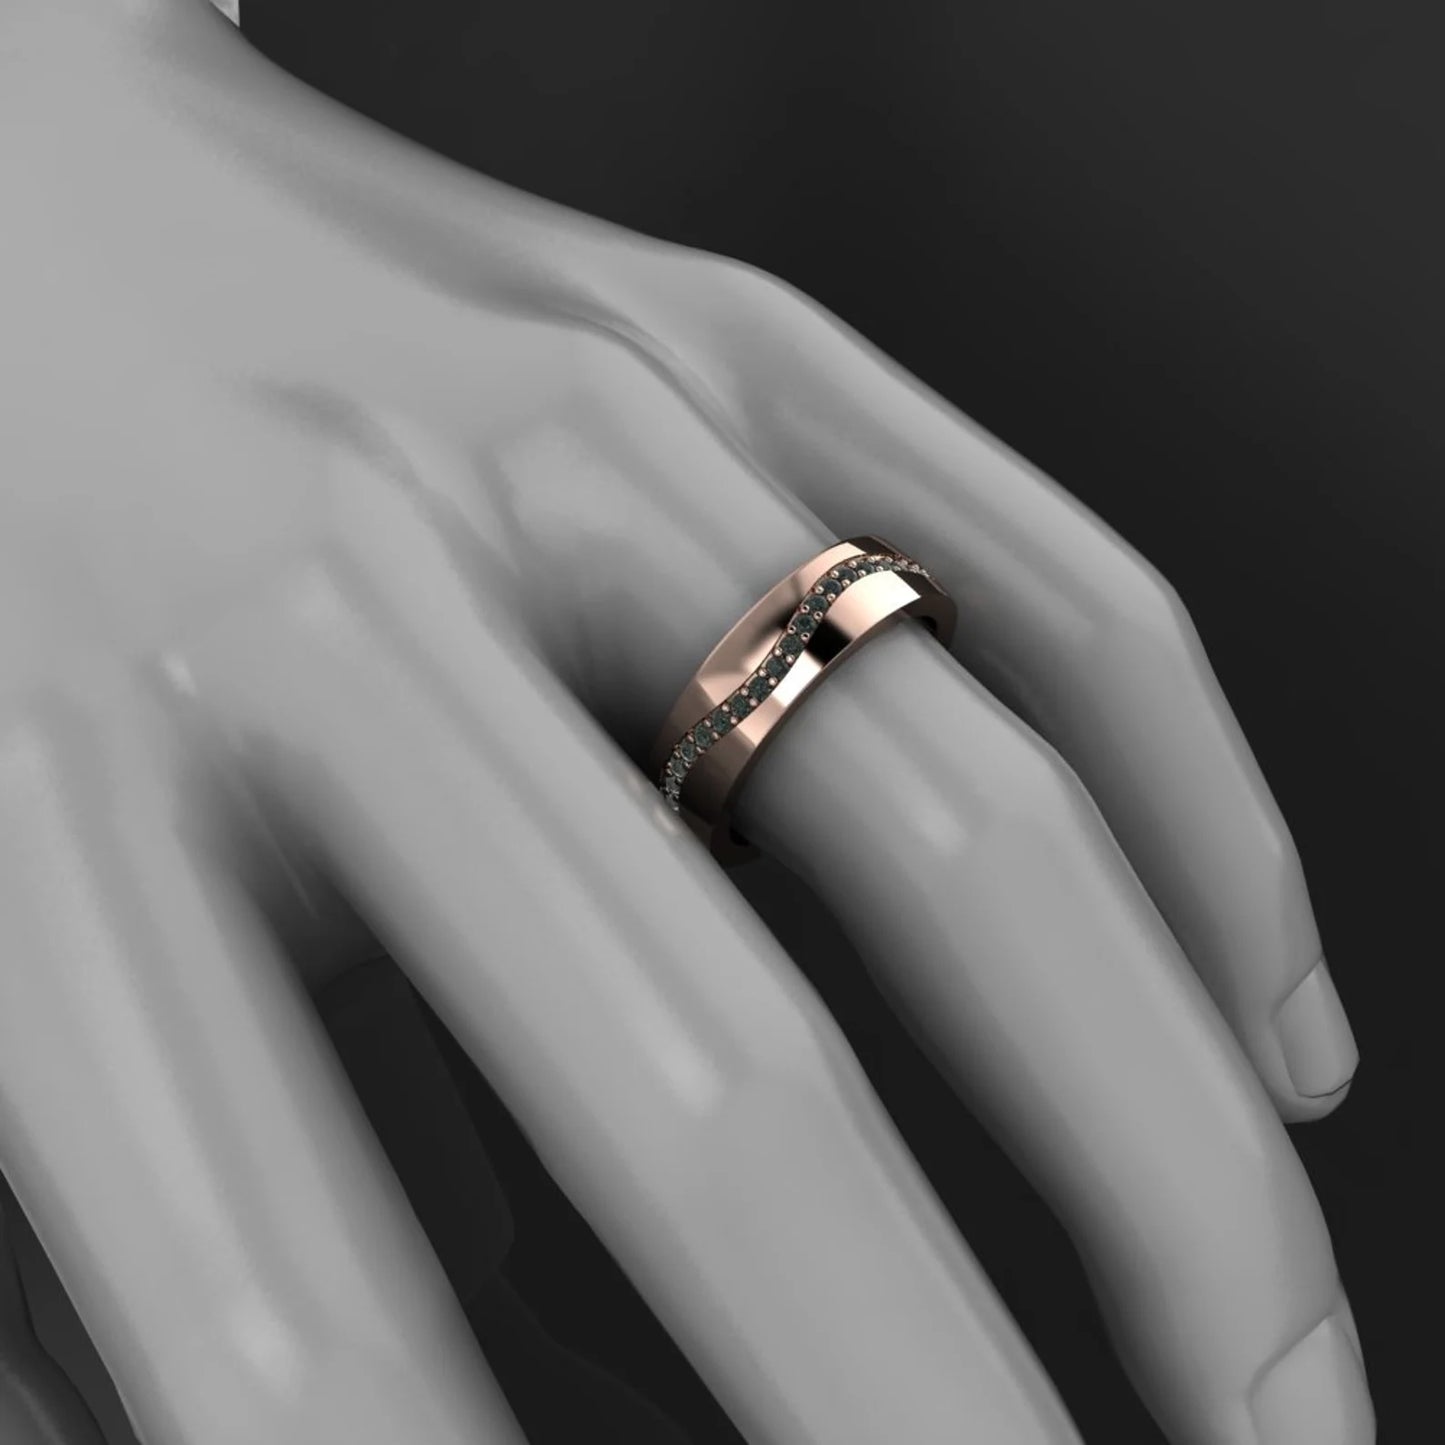 cayton ring - men's gold and black diamond wedding band, black diamond ring - J Hollywood Designs